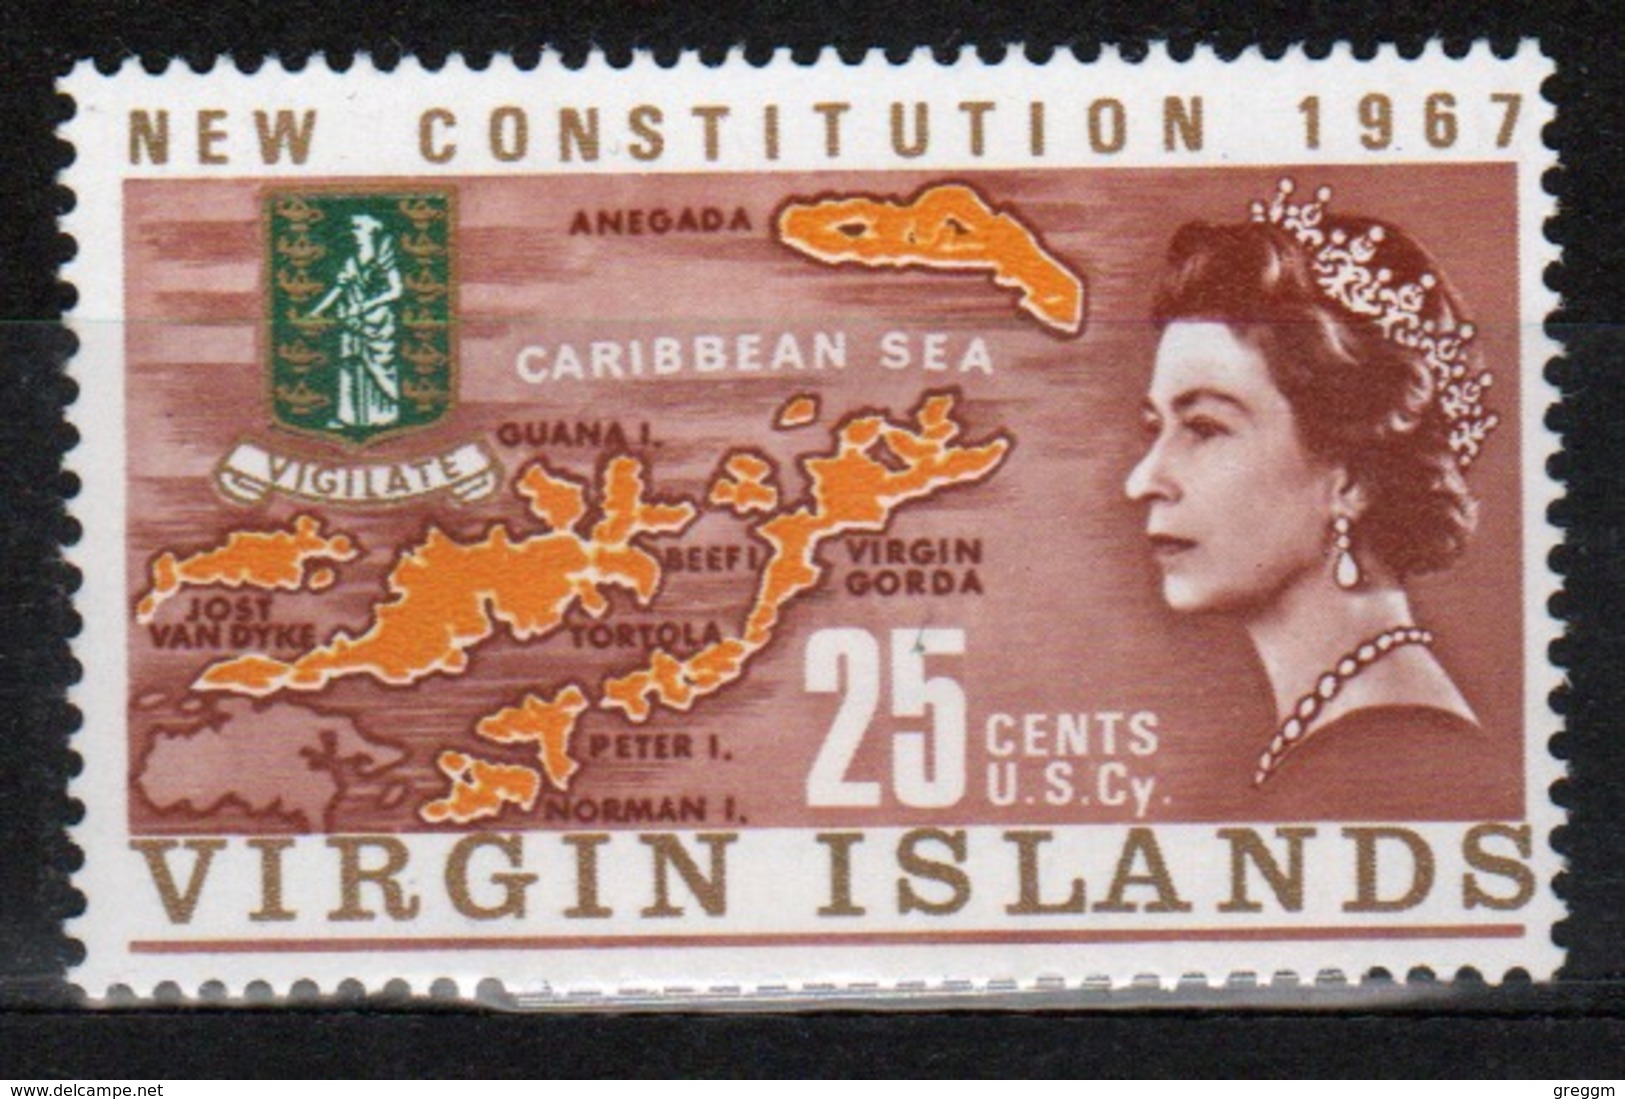 British Virgin Islands 1967 Queen Elizabeth Single 25 Cent Stamp From The New Constitution Set. - British Virgin Islands